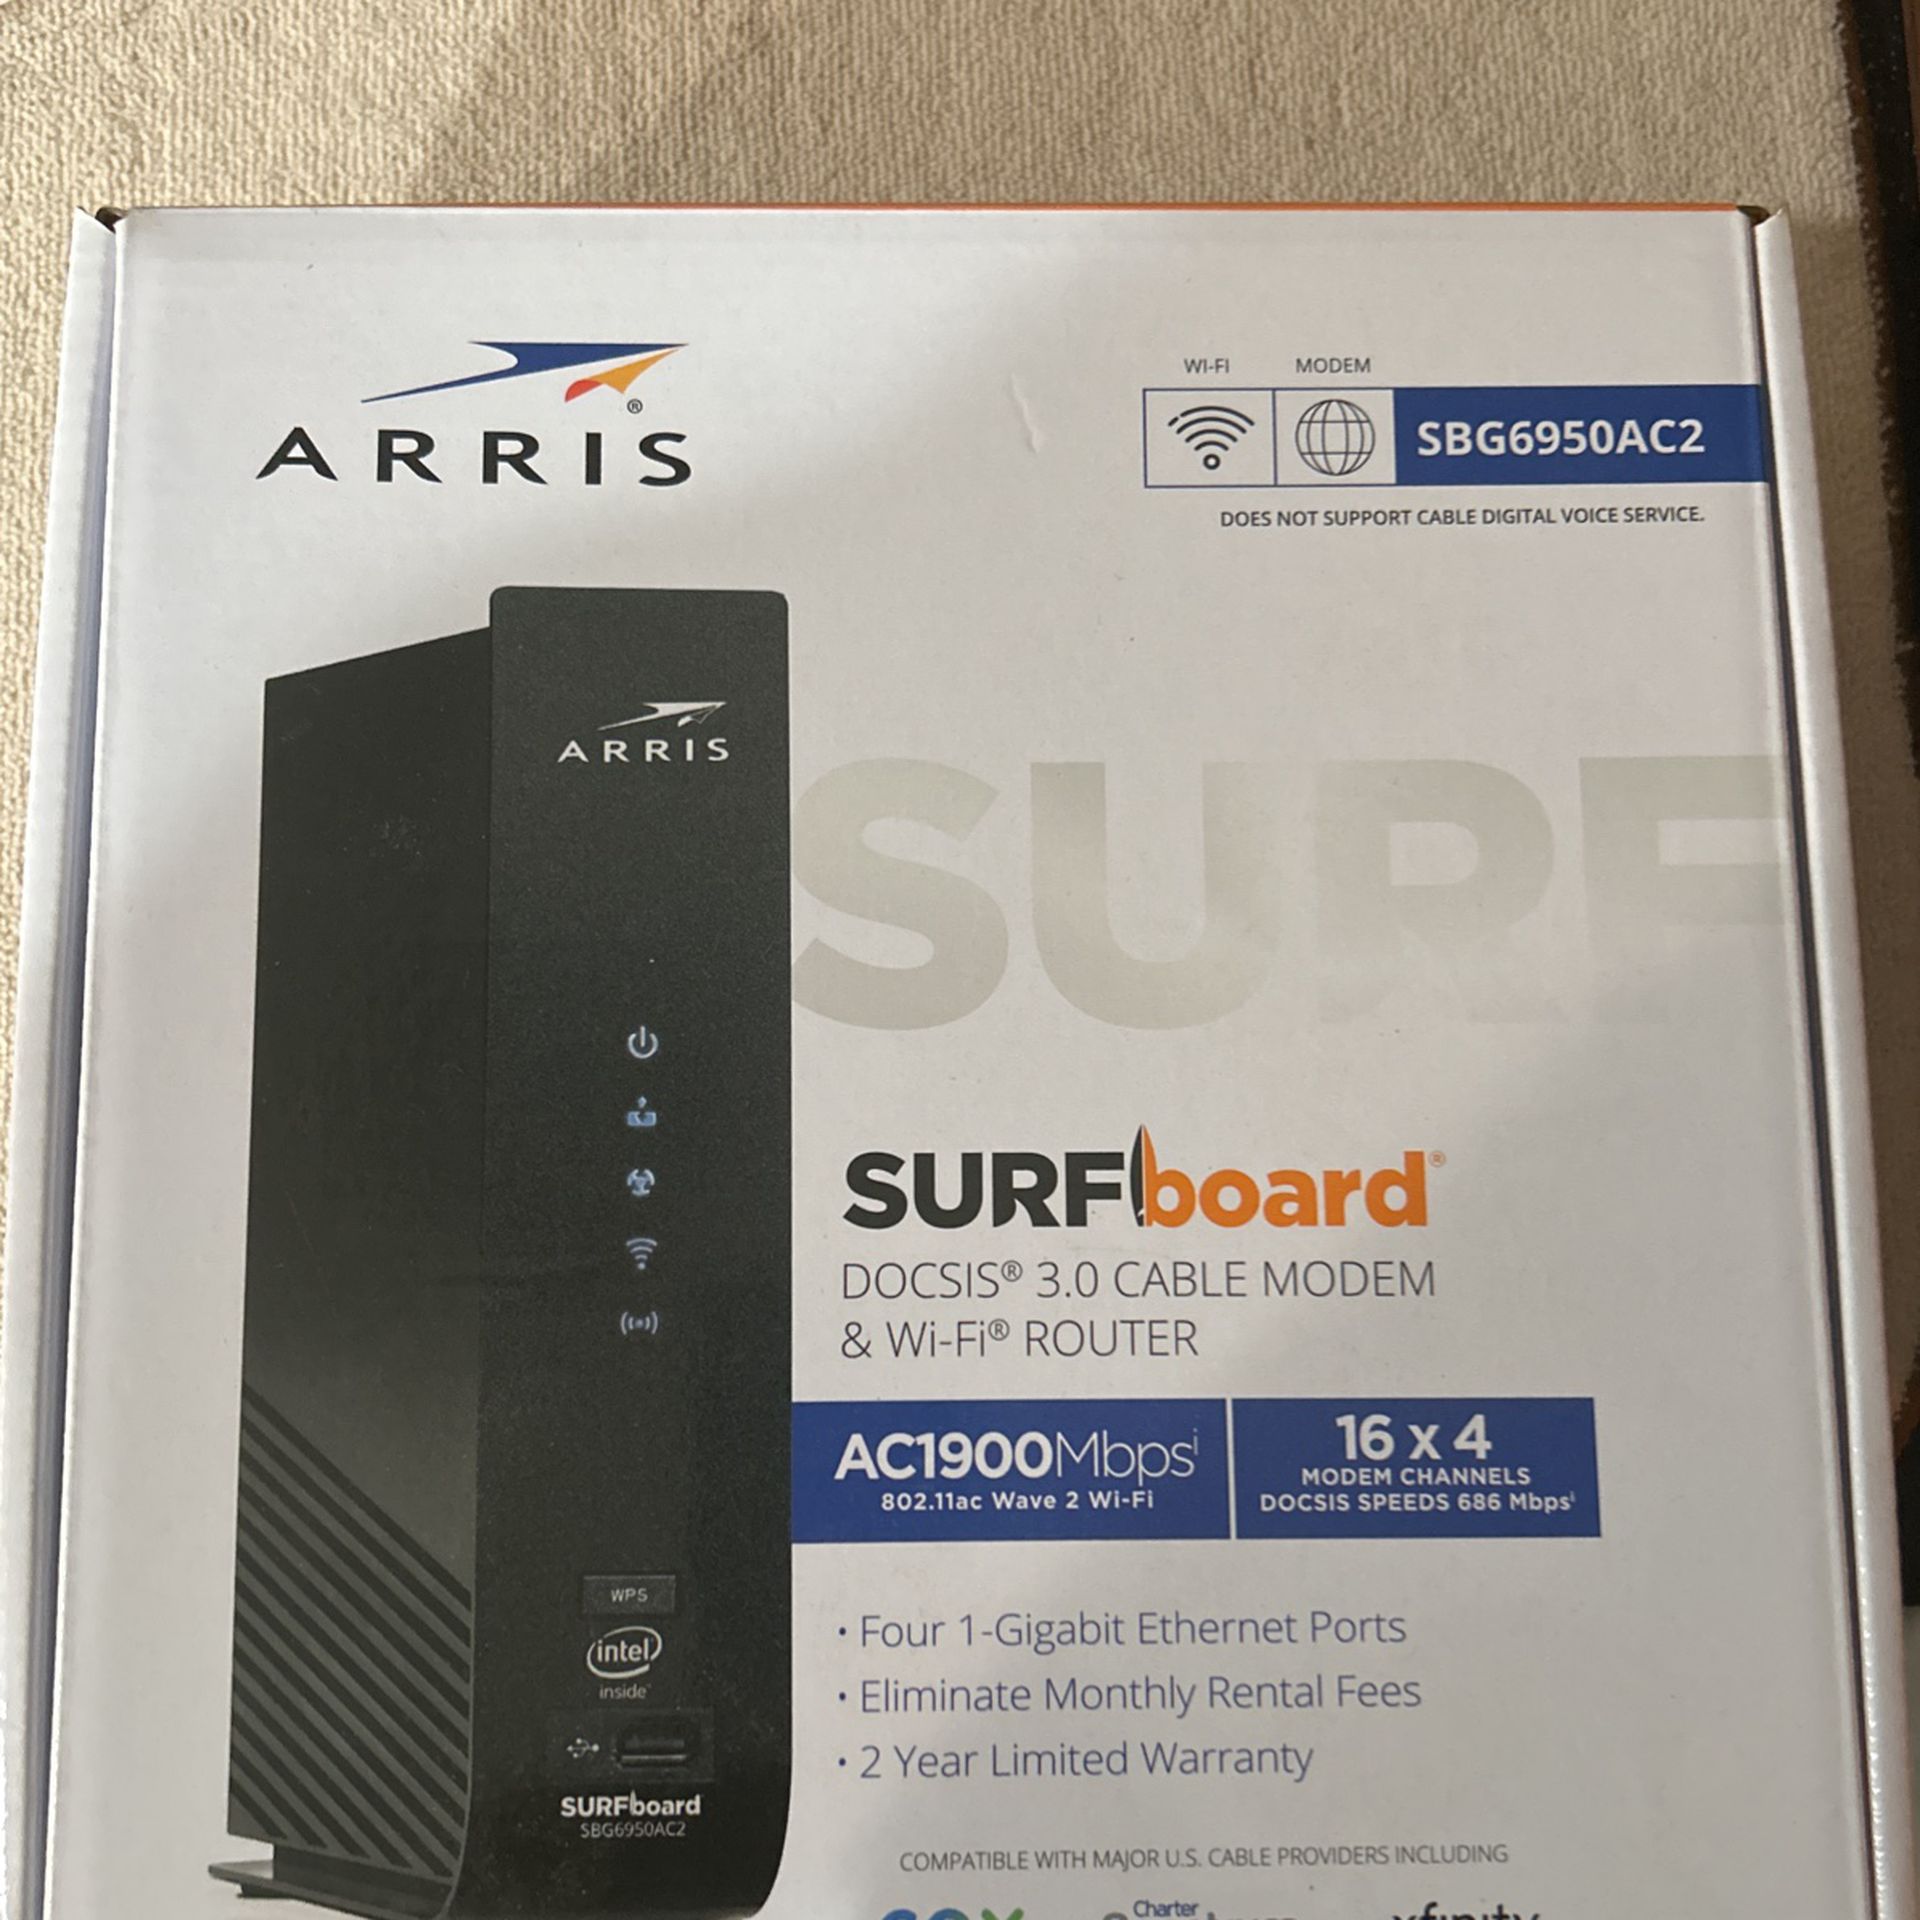 ARRIS - SBG6950AC2 Surfboard Modem/Router